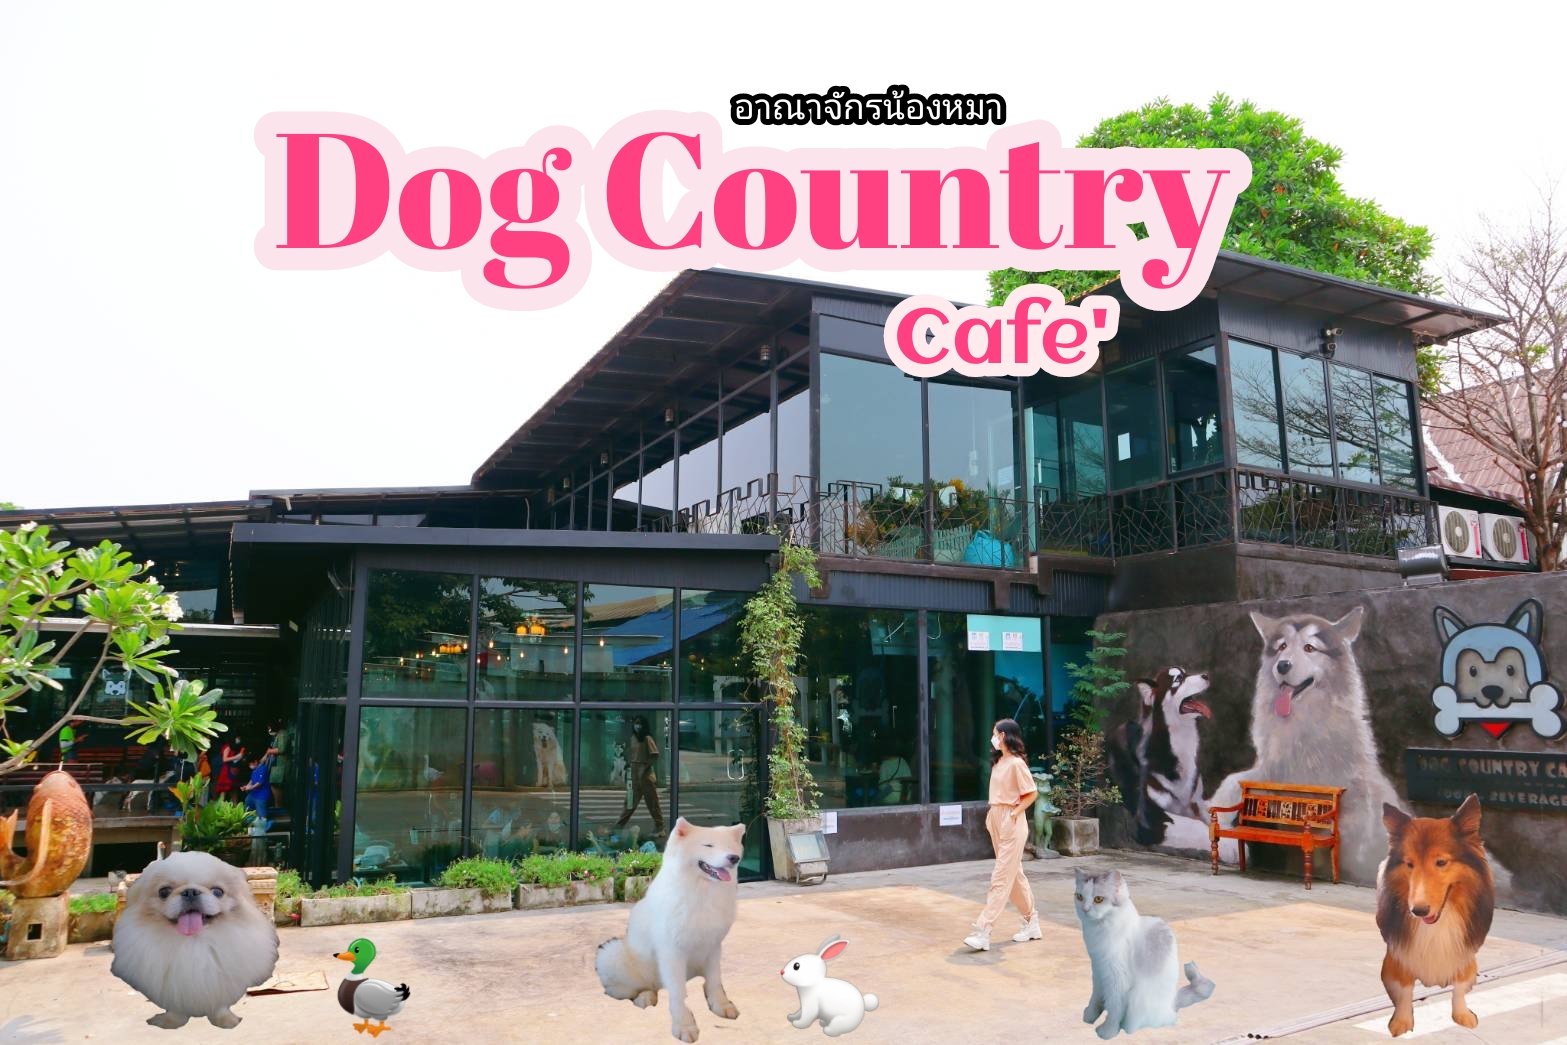 [SR] Dog Country Cafe คาเฟ่น้องหมา pantip